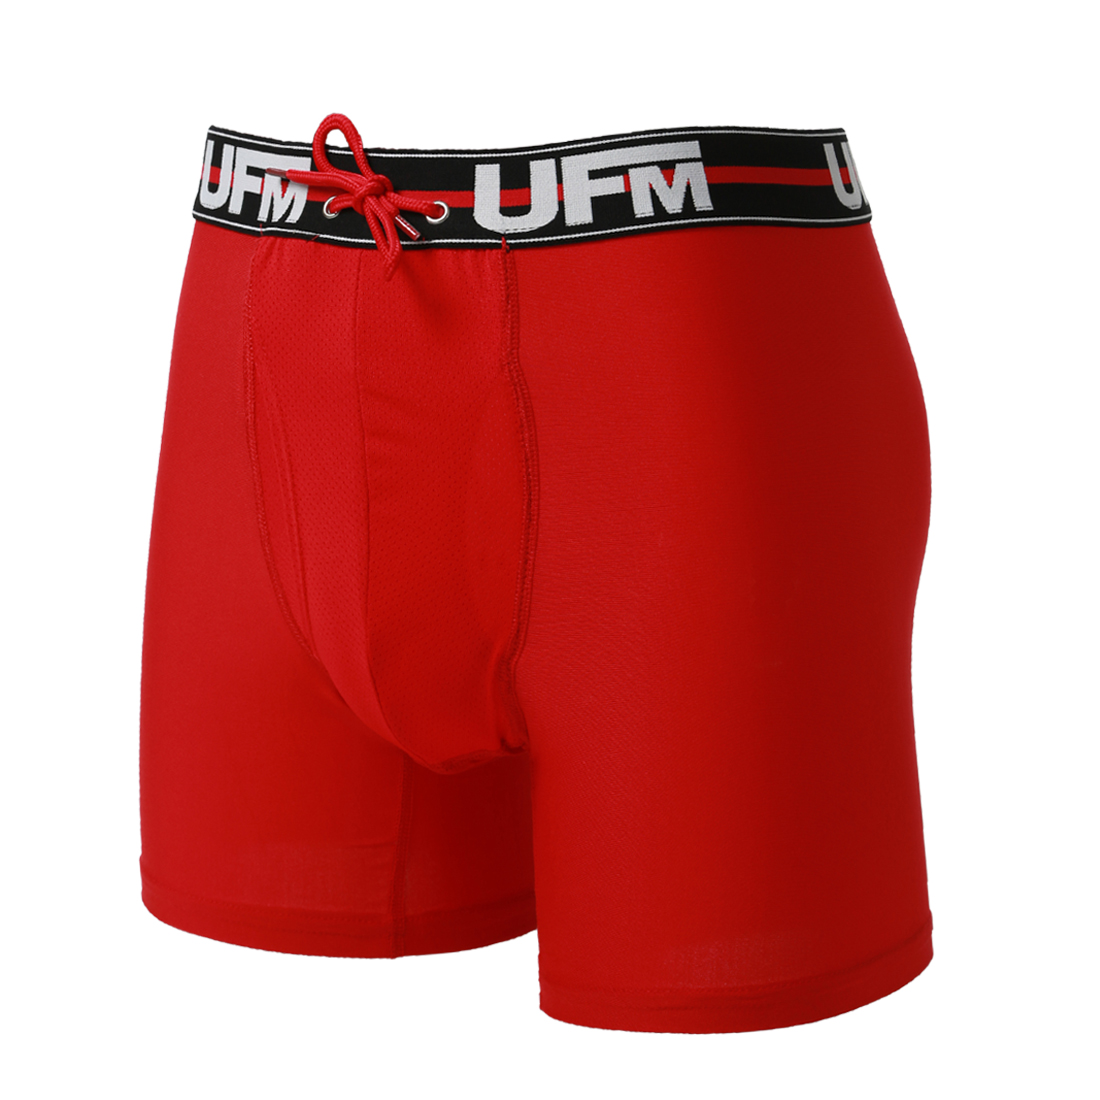 Parent UFM Underwear for Men Medical Polyester 6 inch Original Max Boxer Brief Red 800